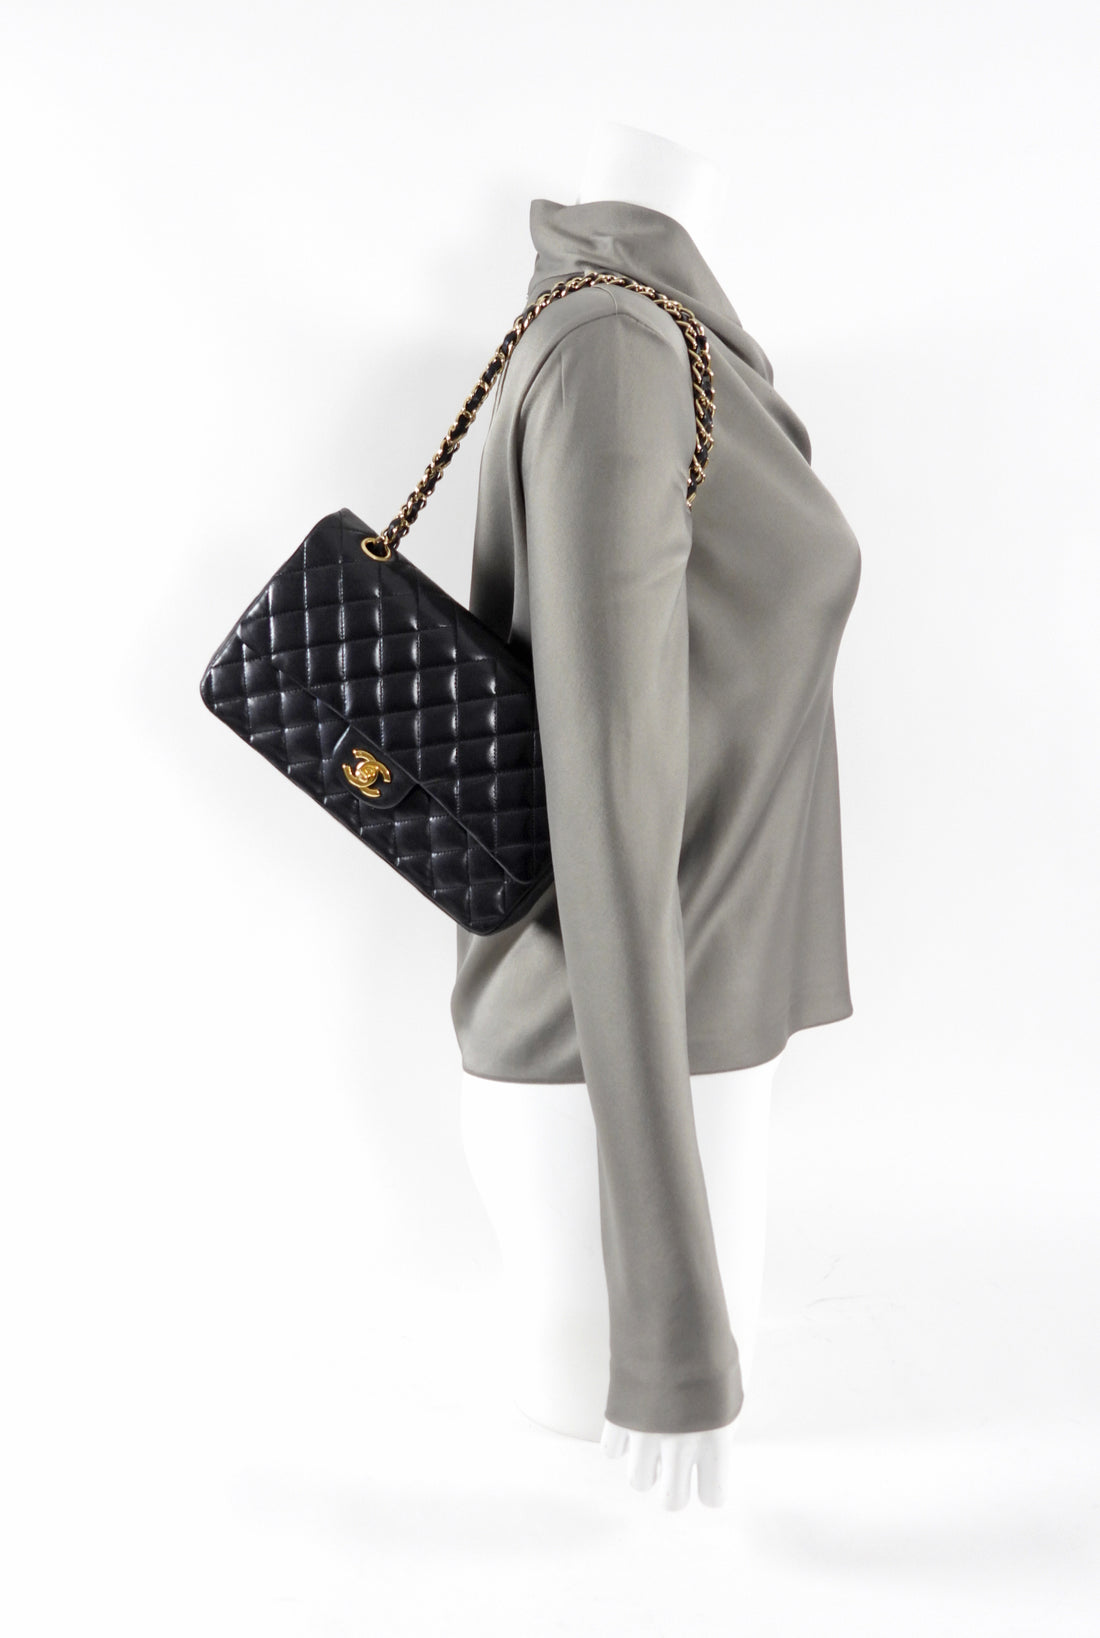 Chanel Black Lambskin Medium Double Classic Flap Bag